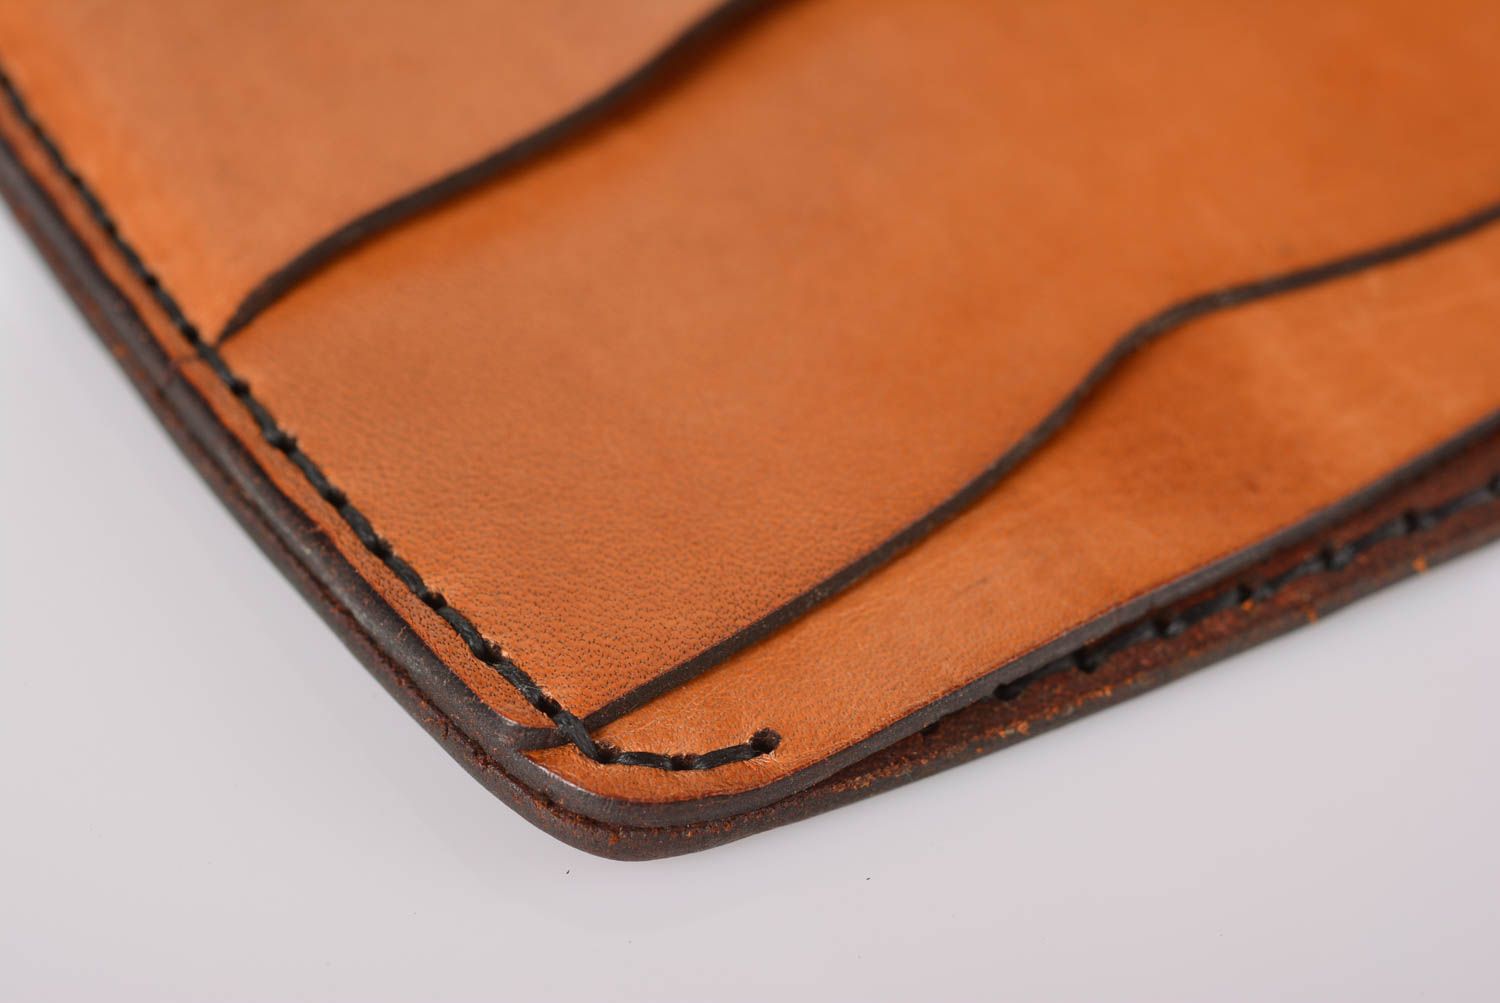 Mens designer wallet handmade leather wallet leather goods gifts for boyfriend photo 5